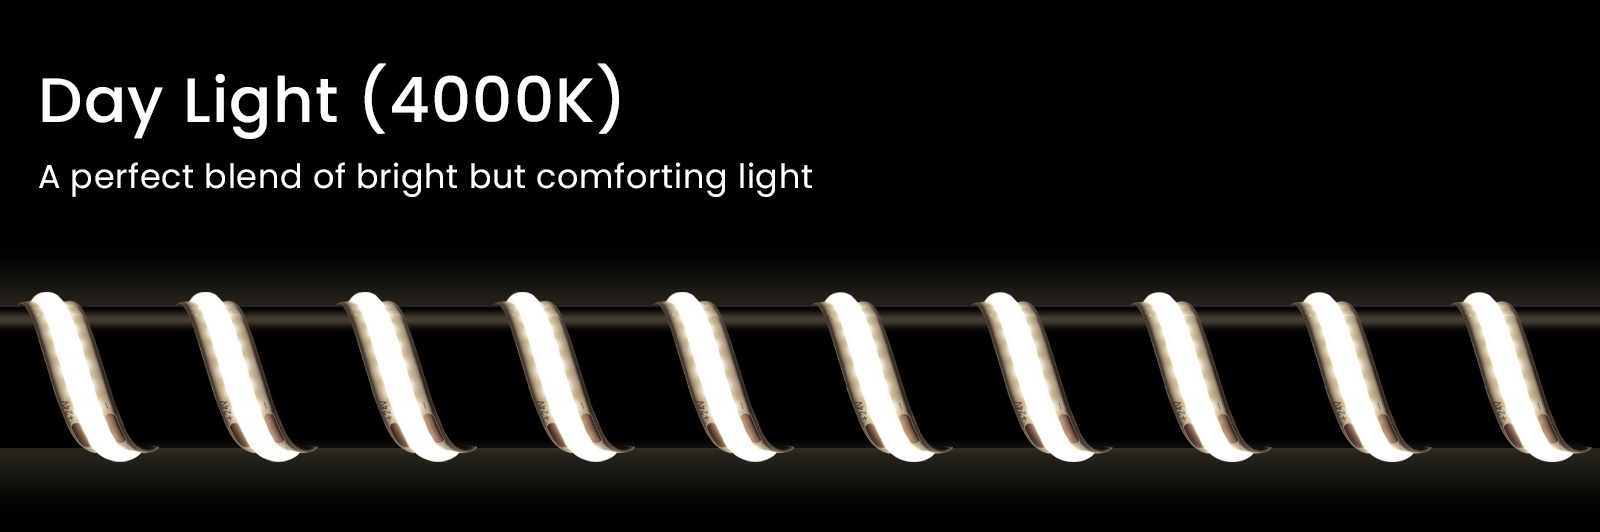 14W Single Colour Aon LED Strip Lights in 4000K Day Light